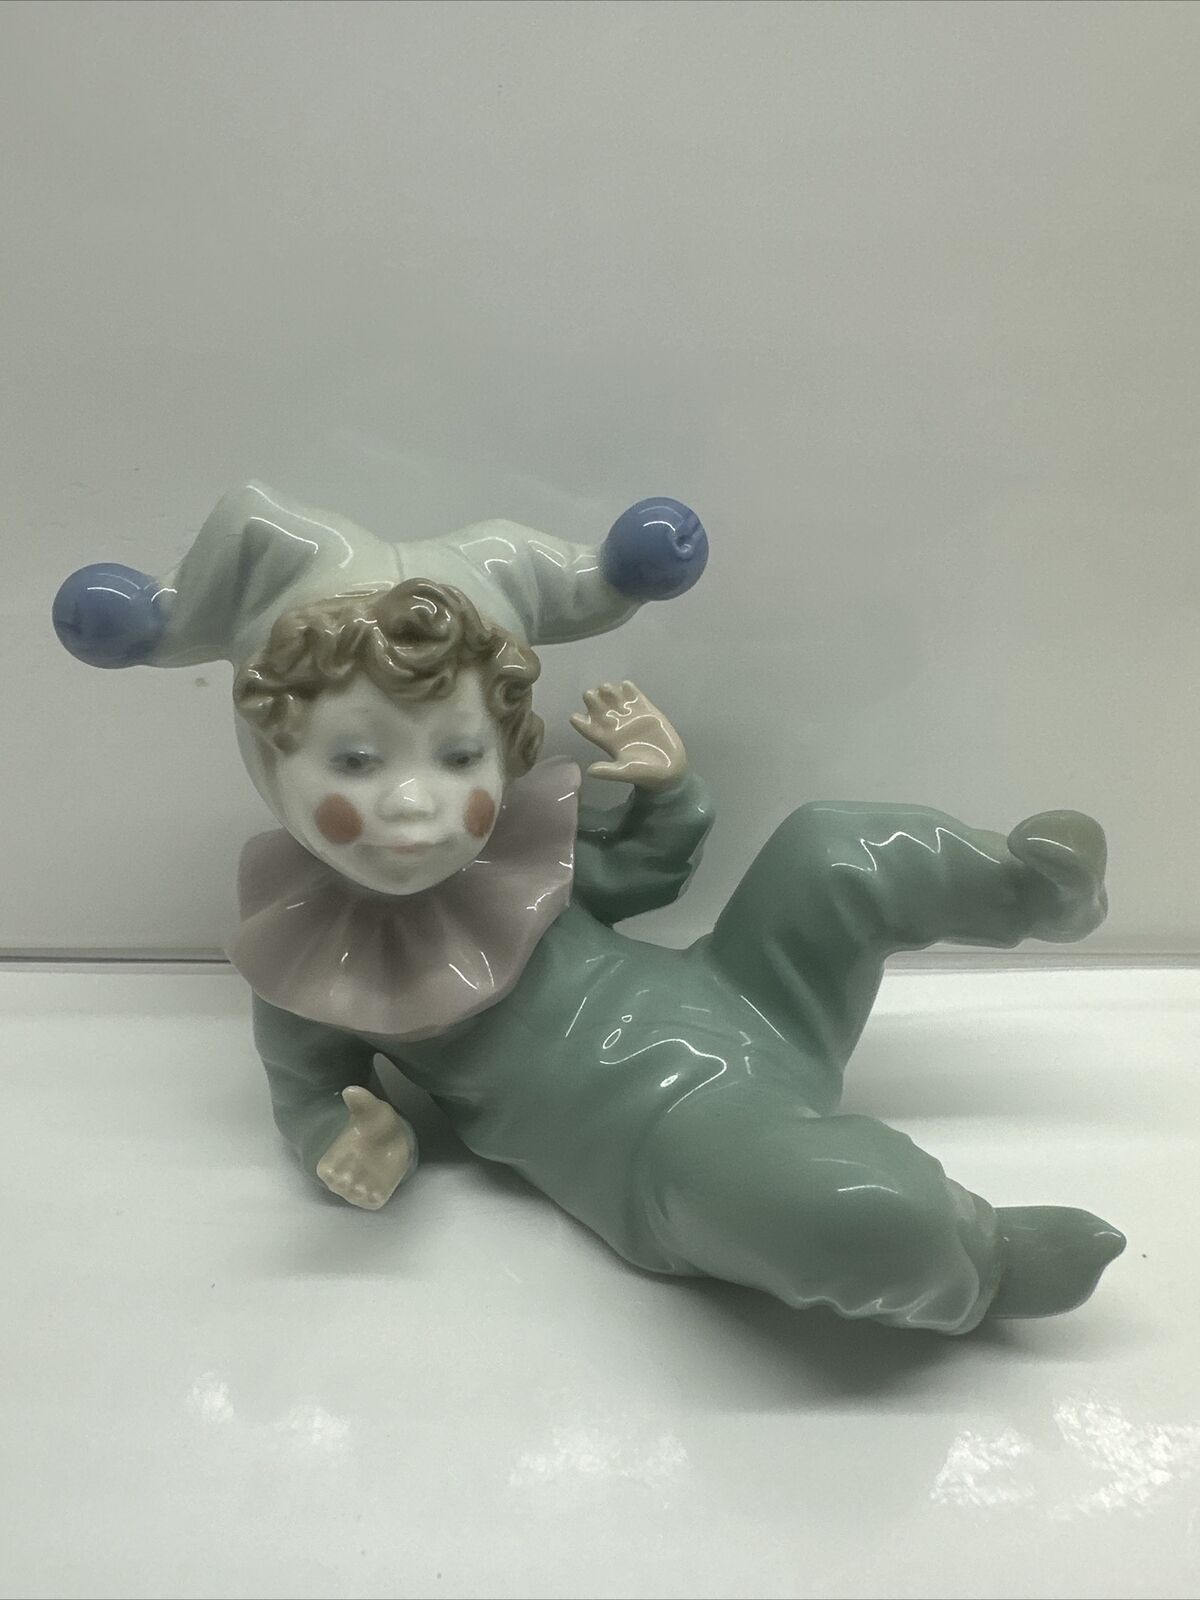 Vintage Nao by Llado Jangles Clown Jester 1988 Figurine  5”x 3.5